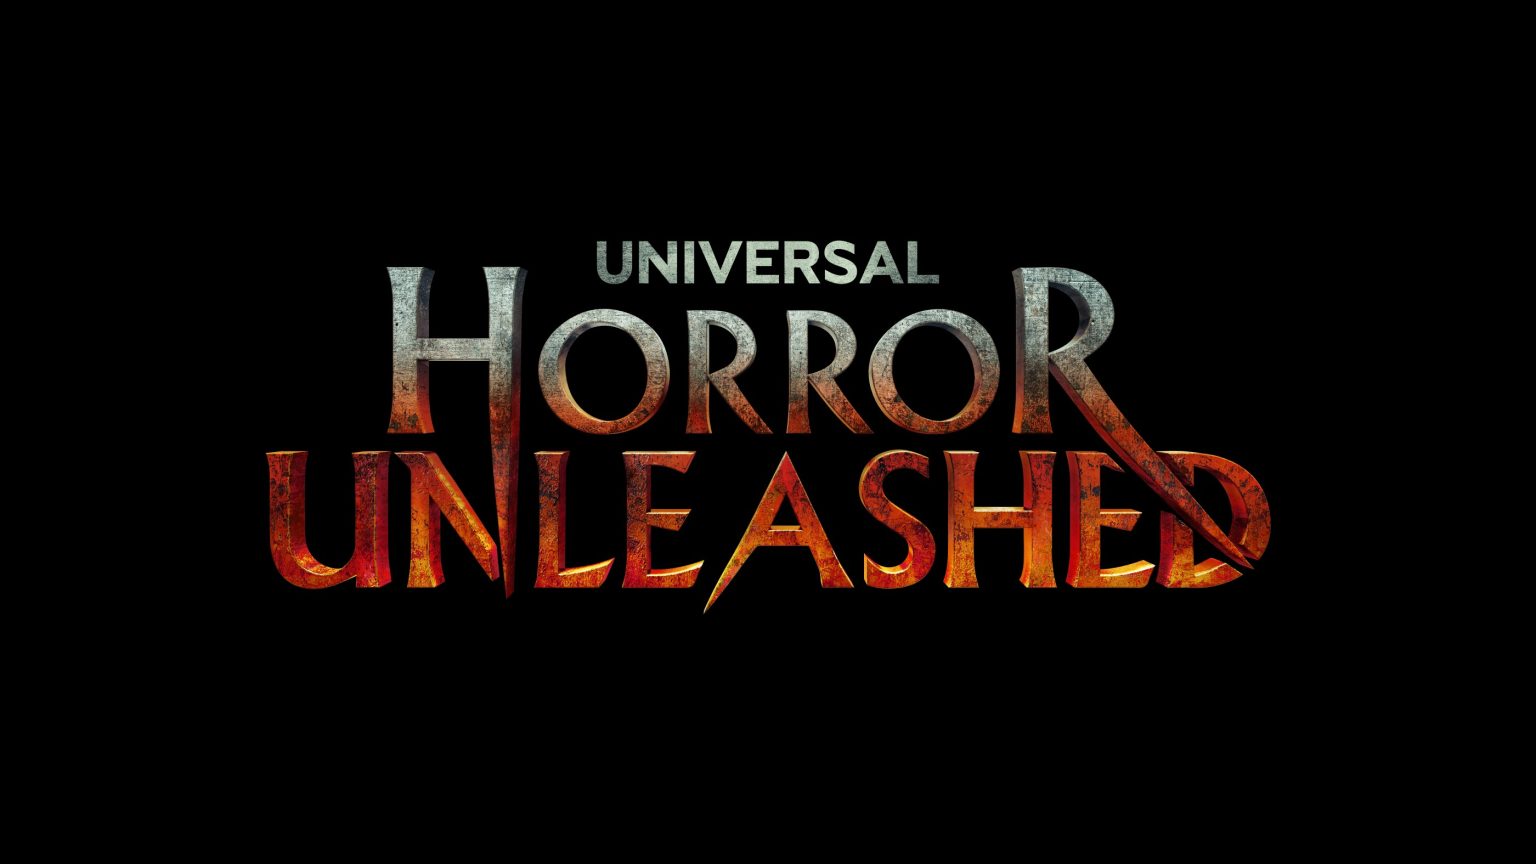 Universal-Horror-Unleashed-Logocrop-1536x864.jpg